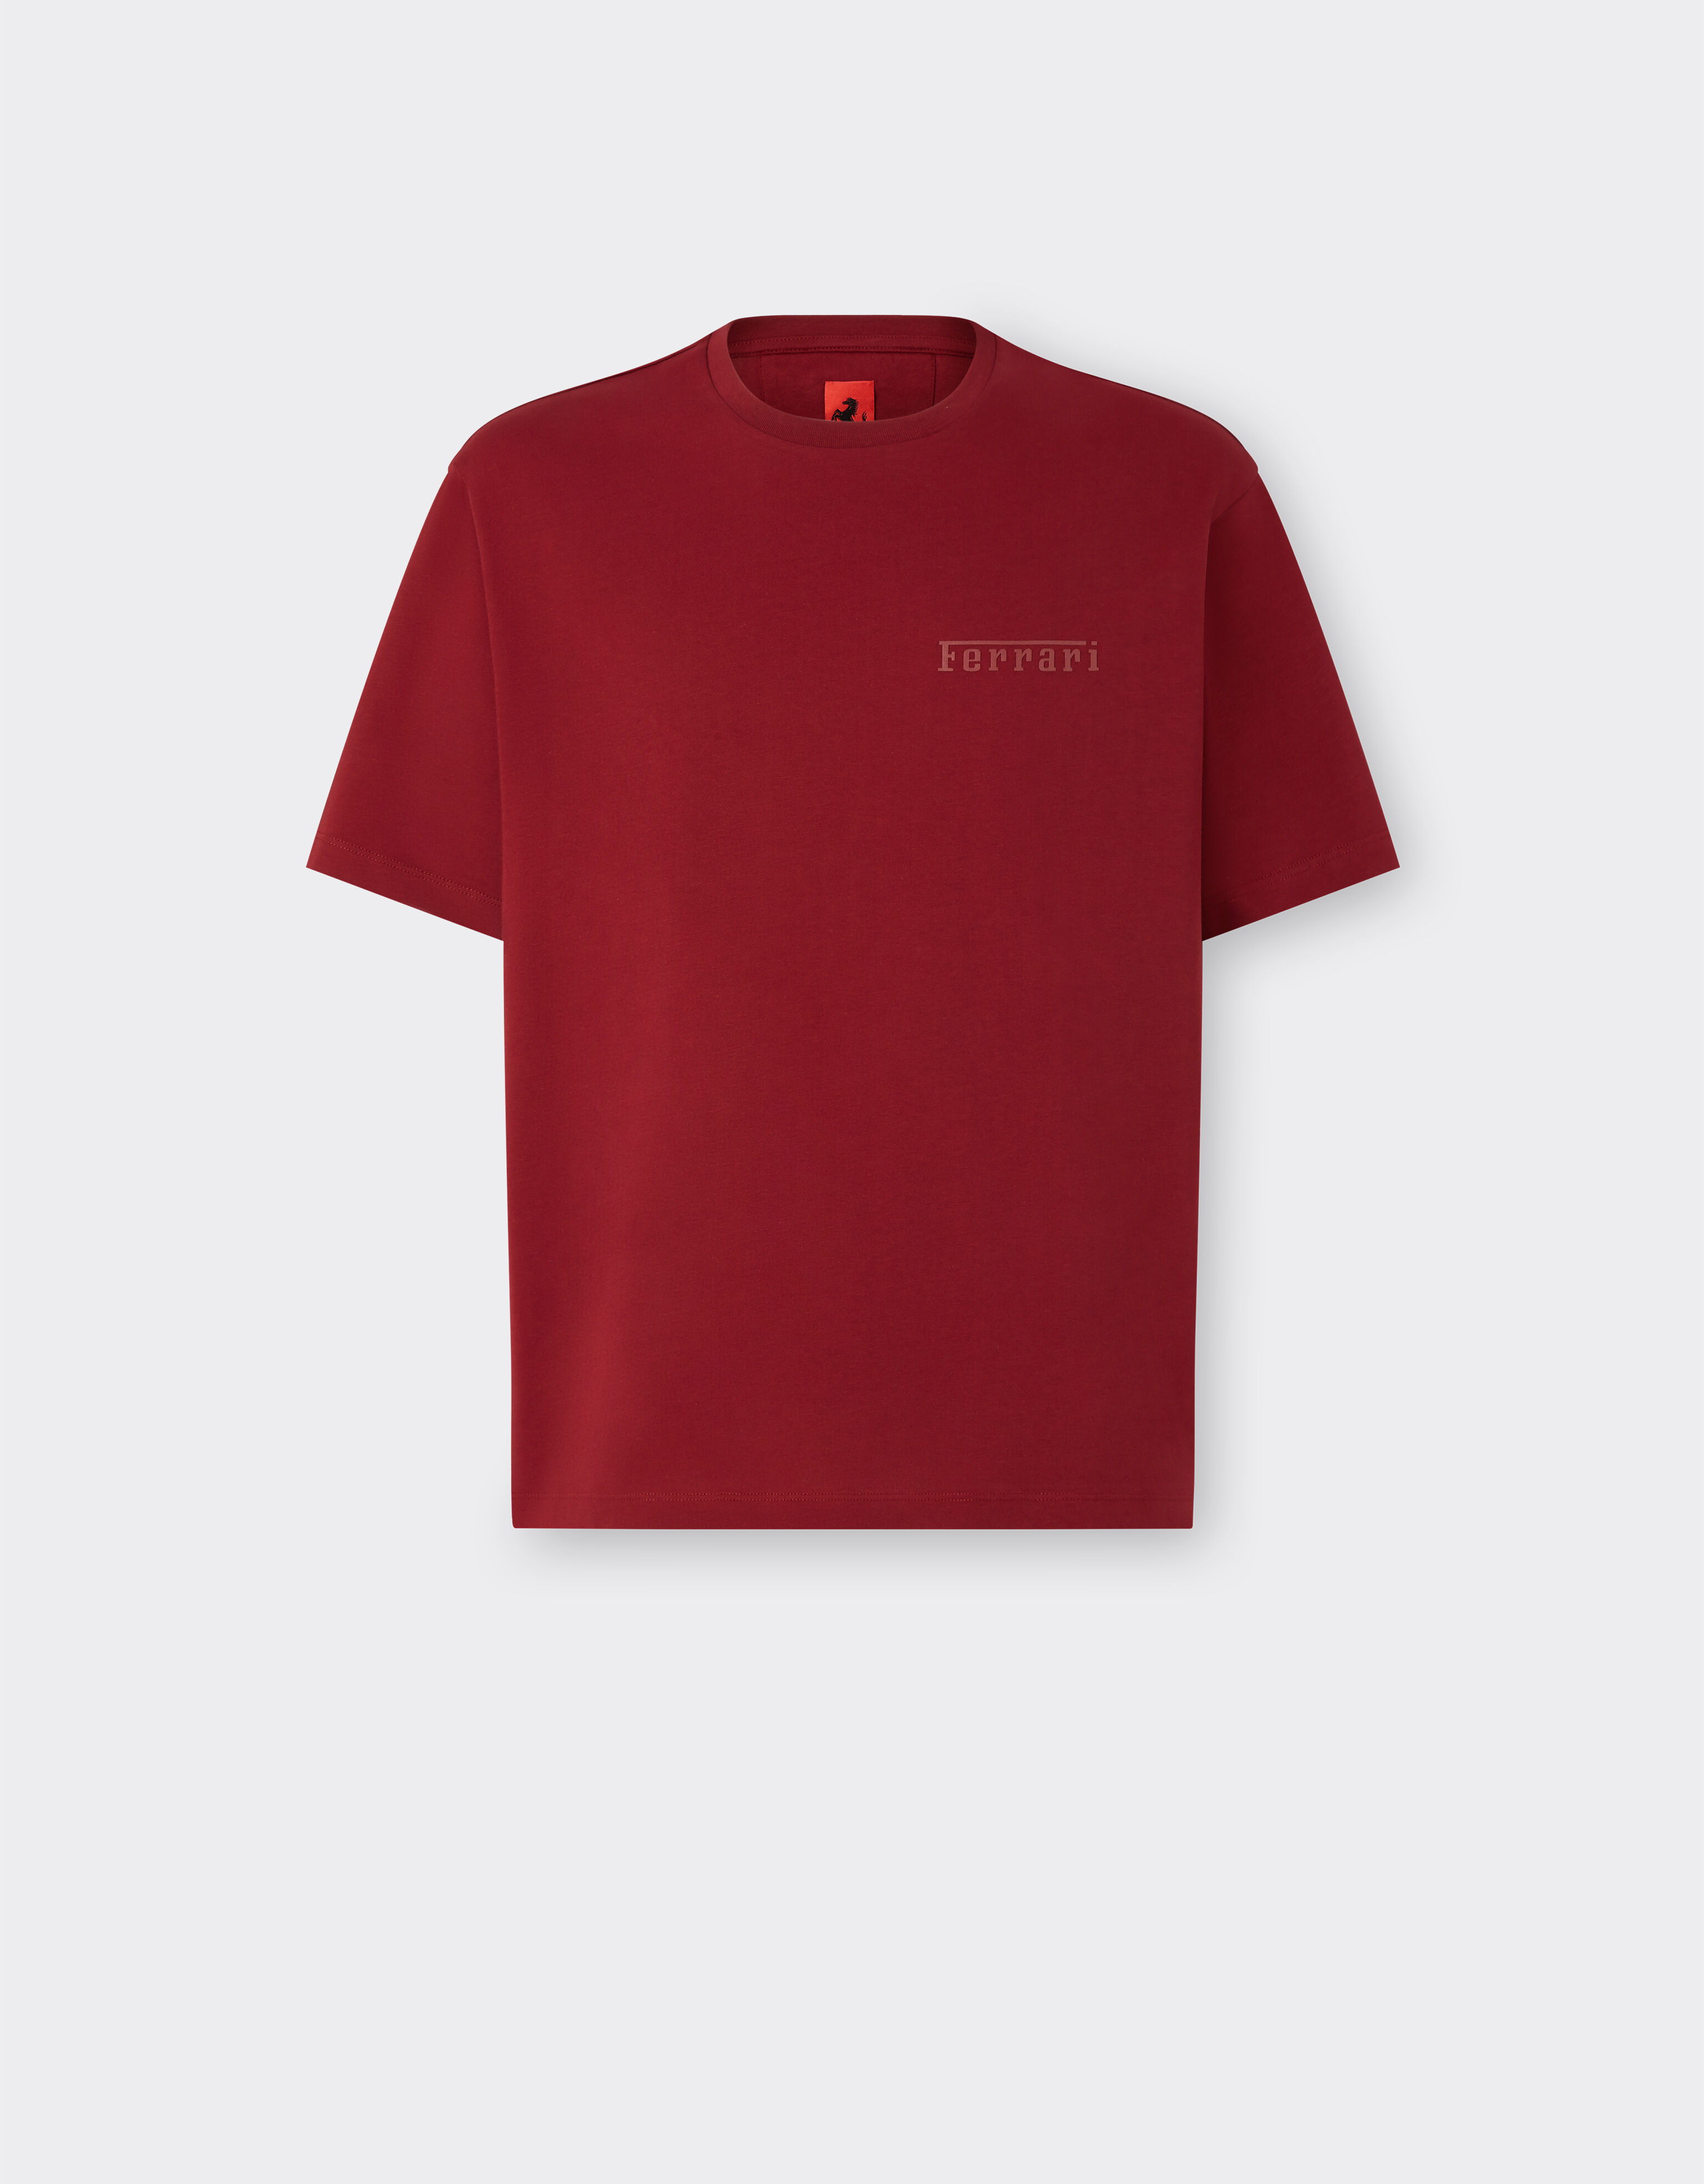 Ferrari T-shirt en coton avec logo Ferrari Bordeaux 21135f